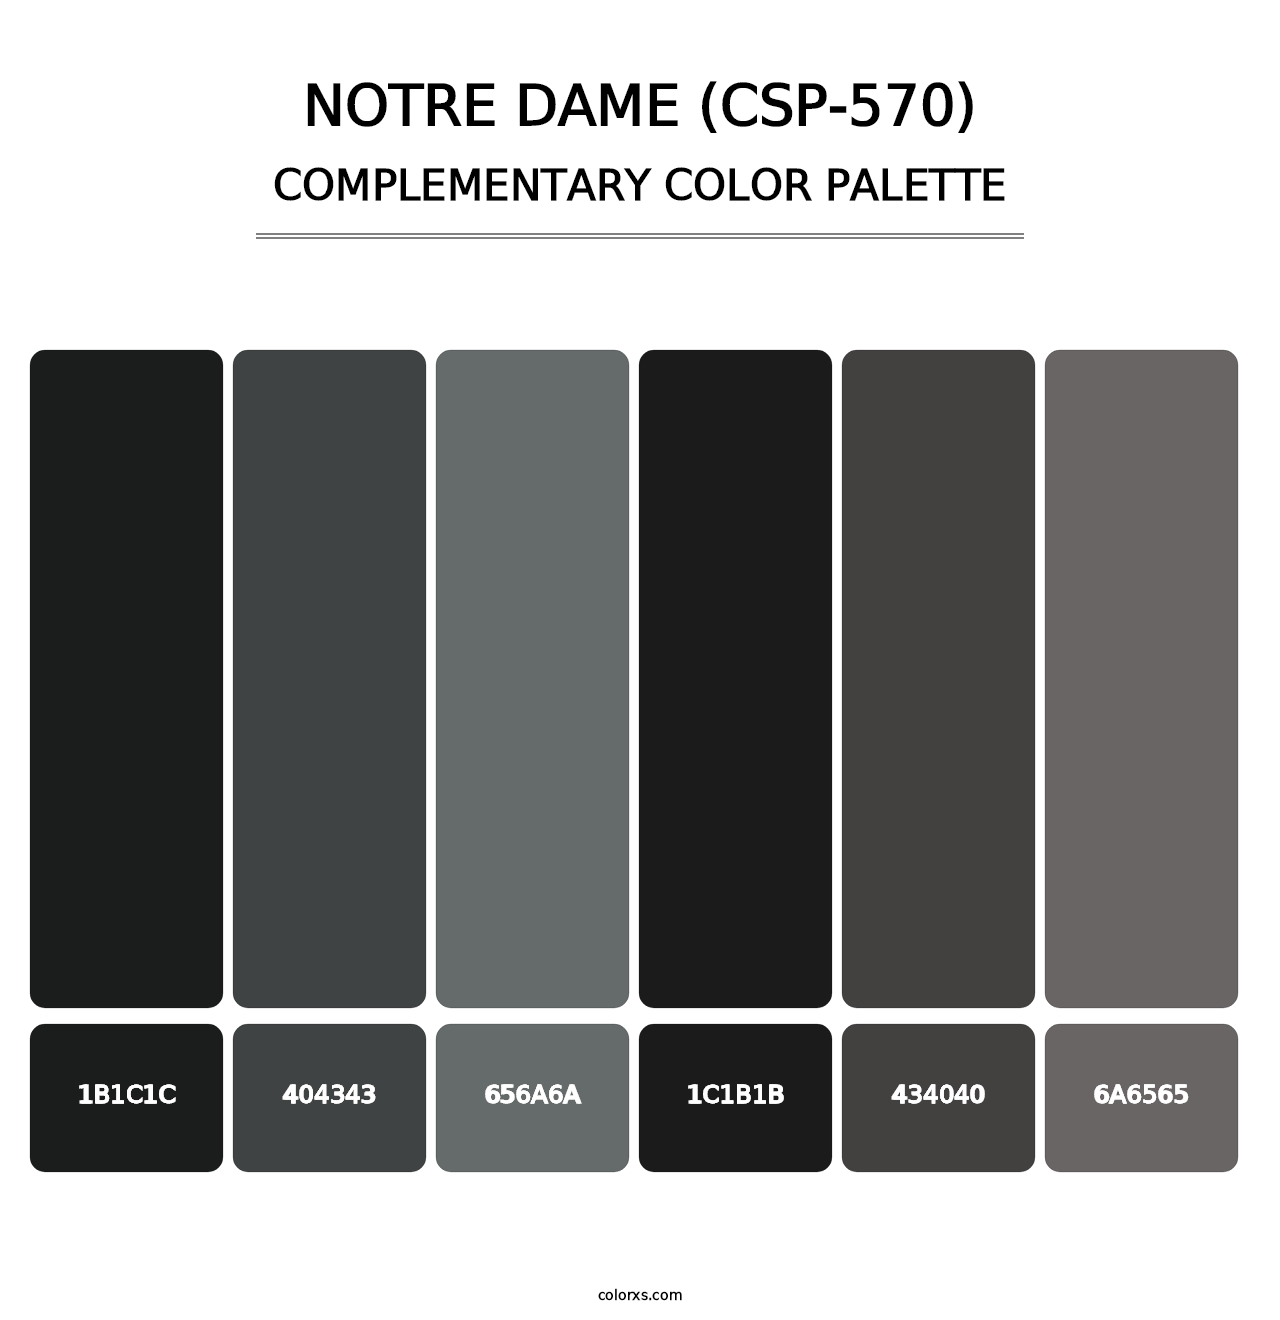 Notre Dame (CSP-570) - Complementary Color Palette